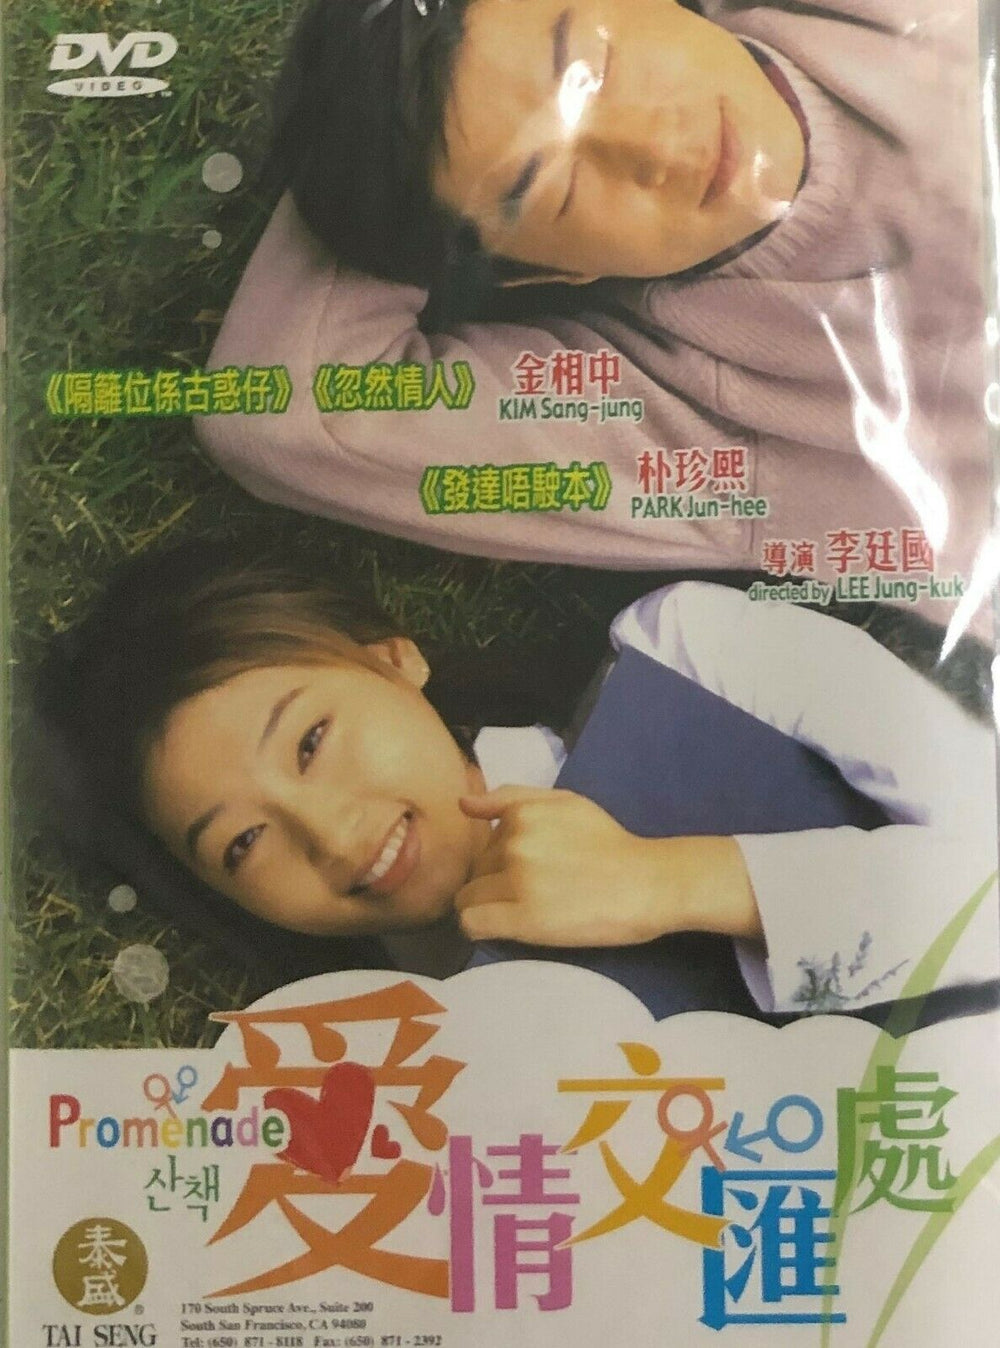 A PROMENADE 愛情交匯處 2005 (KOREAN MOVIE) DVD ENGLISH SUB (REGION FREE)